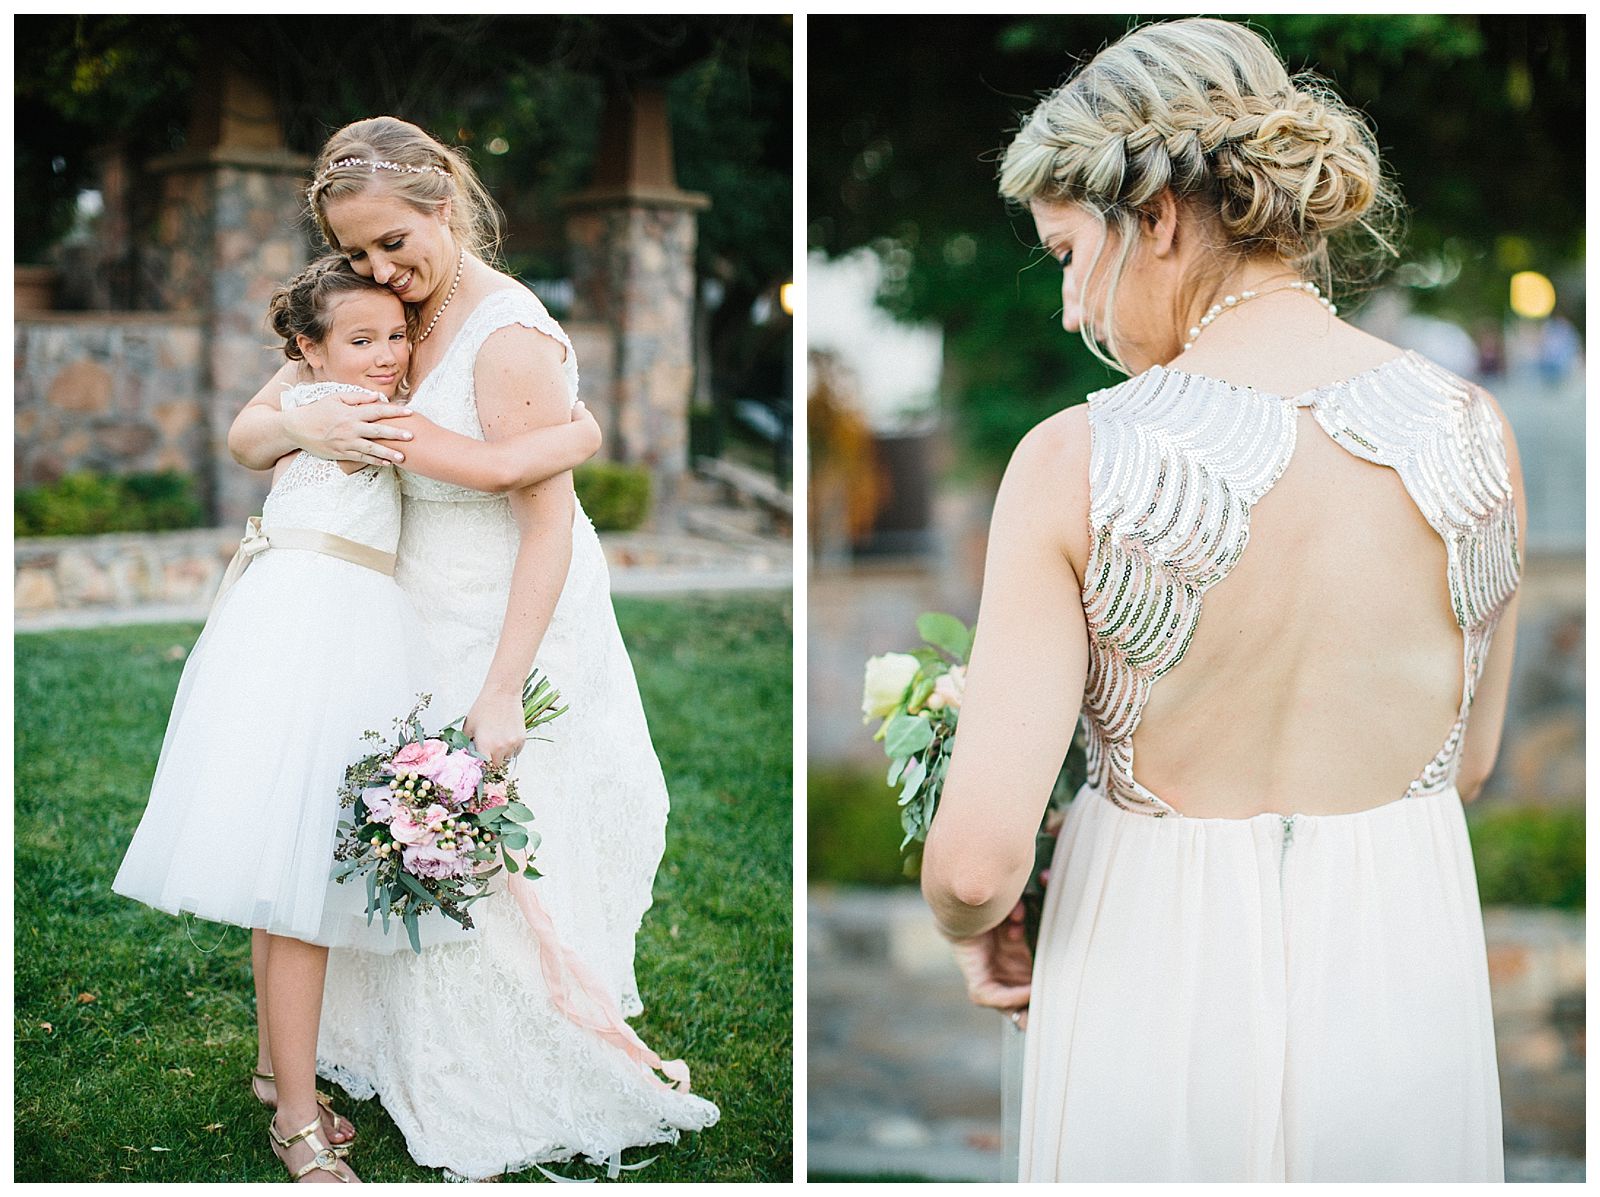 Sammie B , Bride and flower girl, backless bridesmaid dress